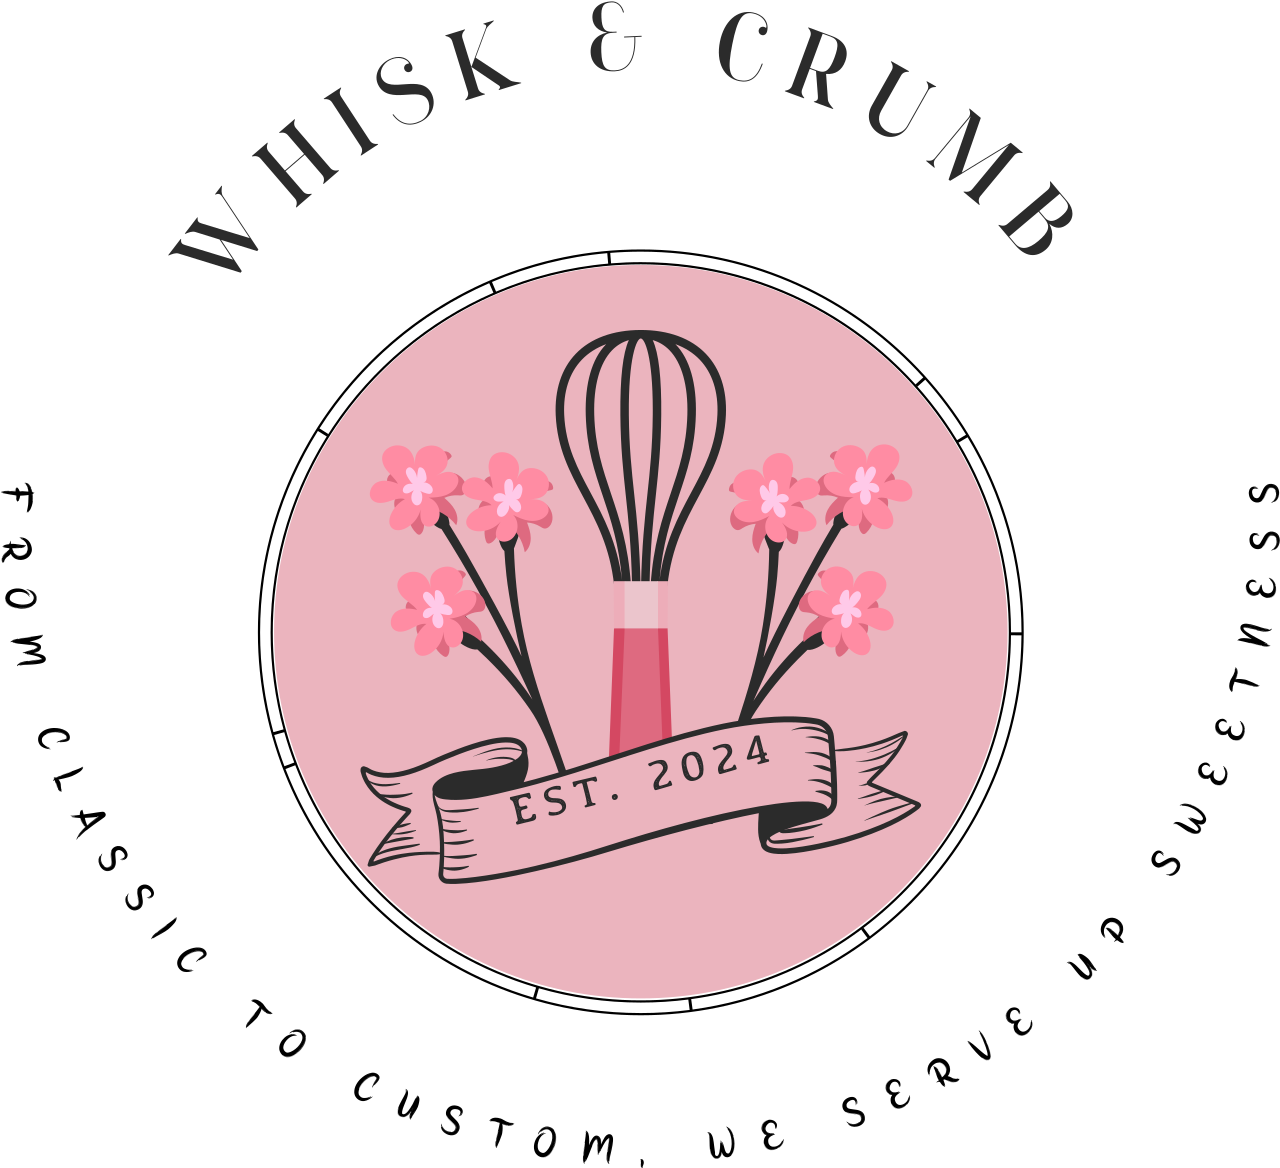 WHISK & CRUMB 's logo